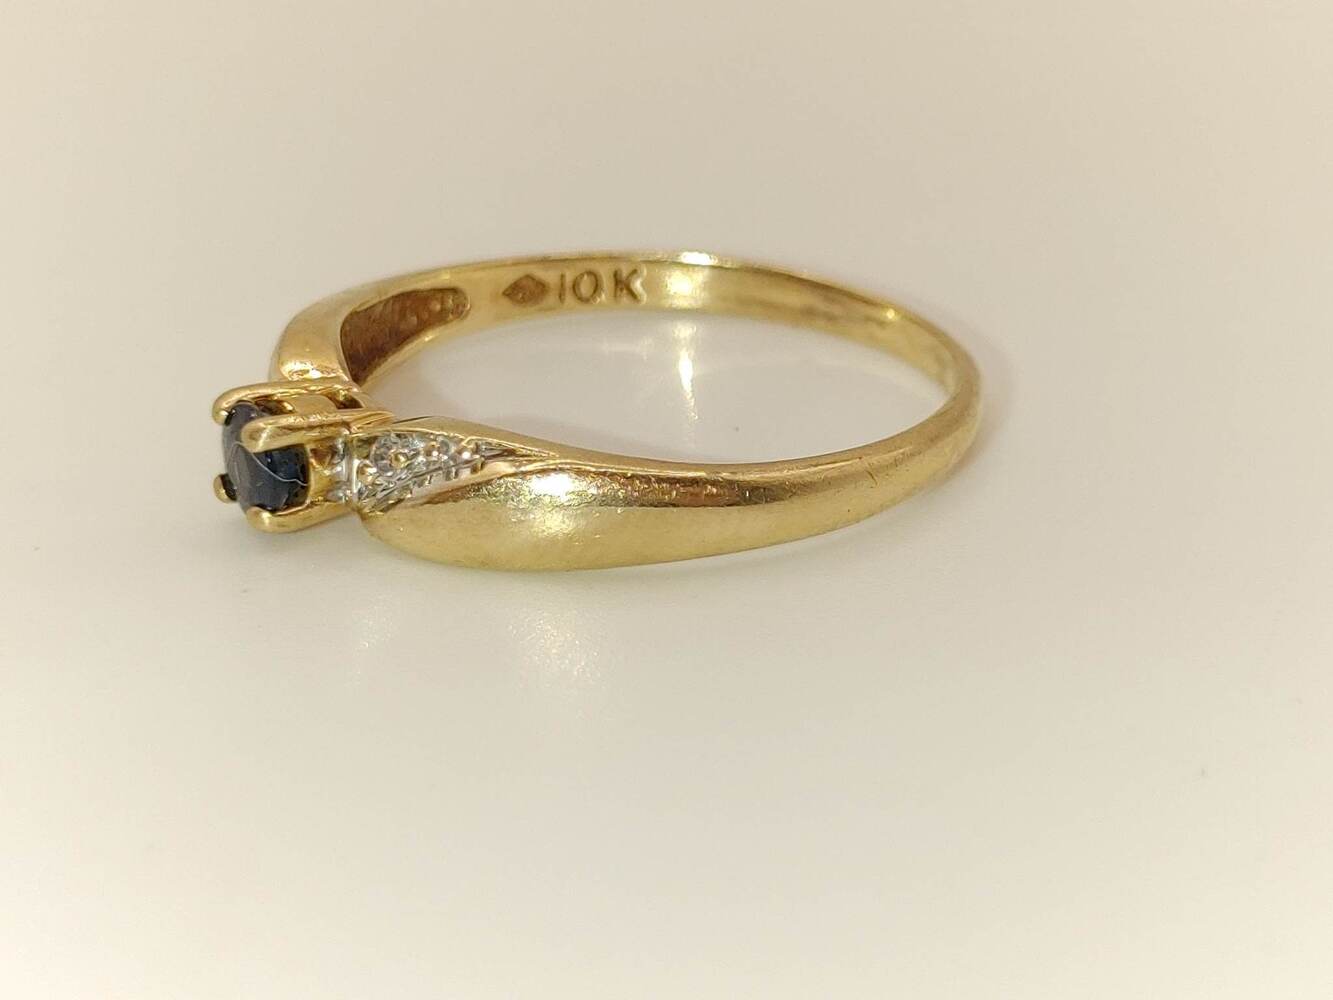 Lady's 10 Karat Yellow Gold Ring with Dark Blue Stone